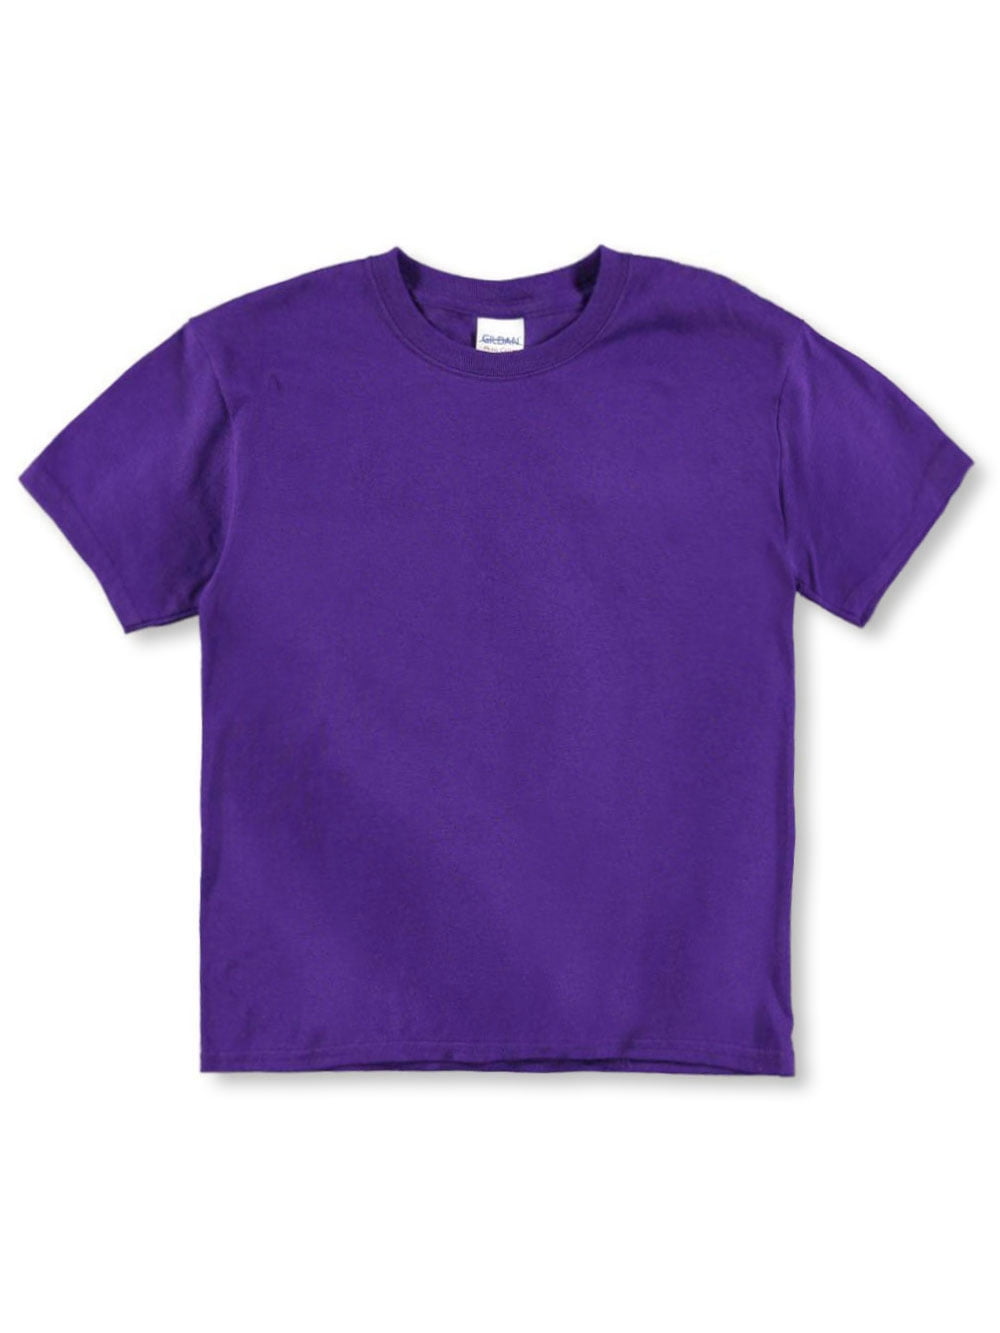 Gildan Unisex Youth T-Shirt - (Little s/6-8 burgundy, Girls)